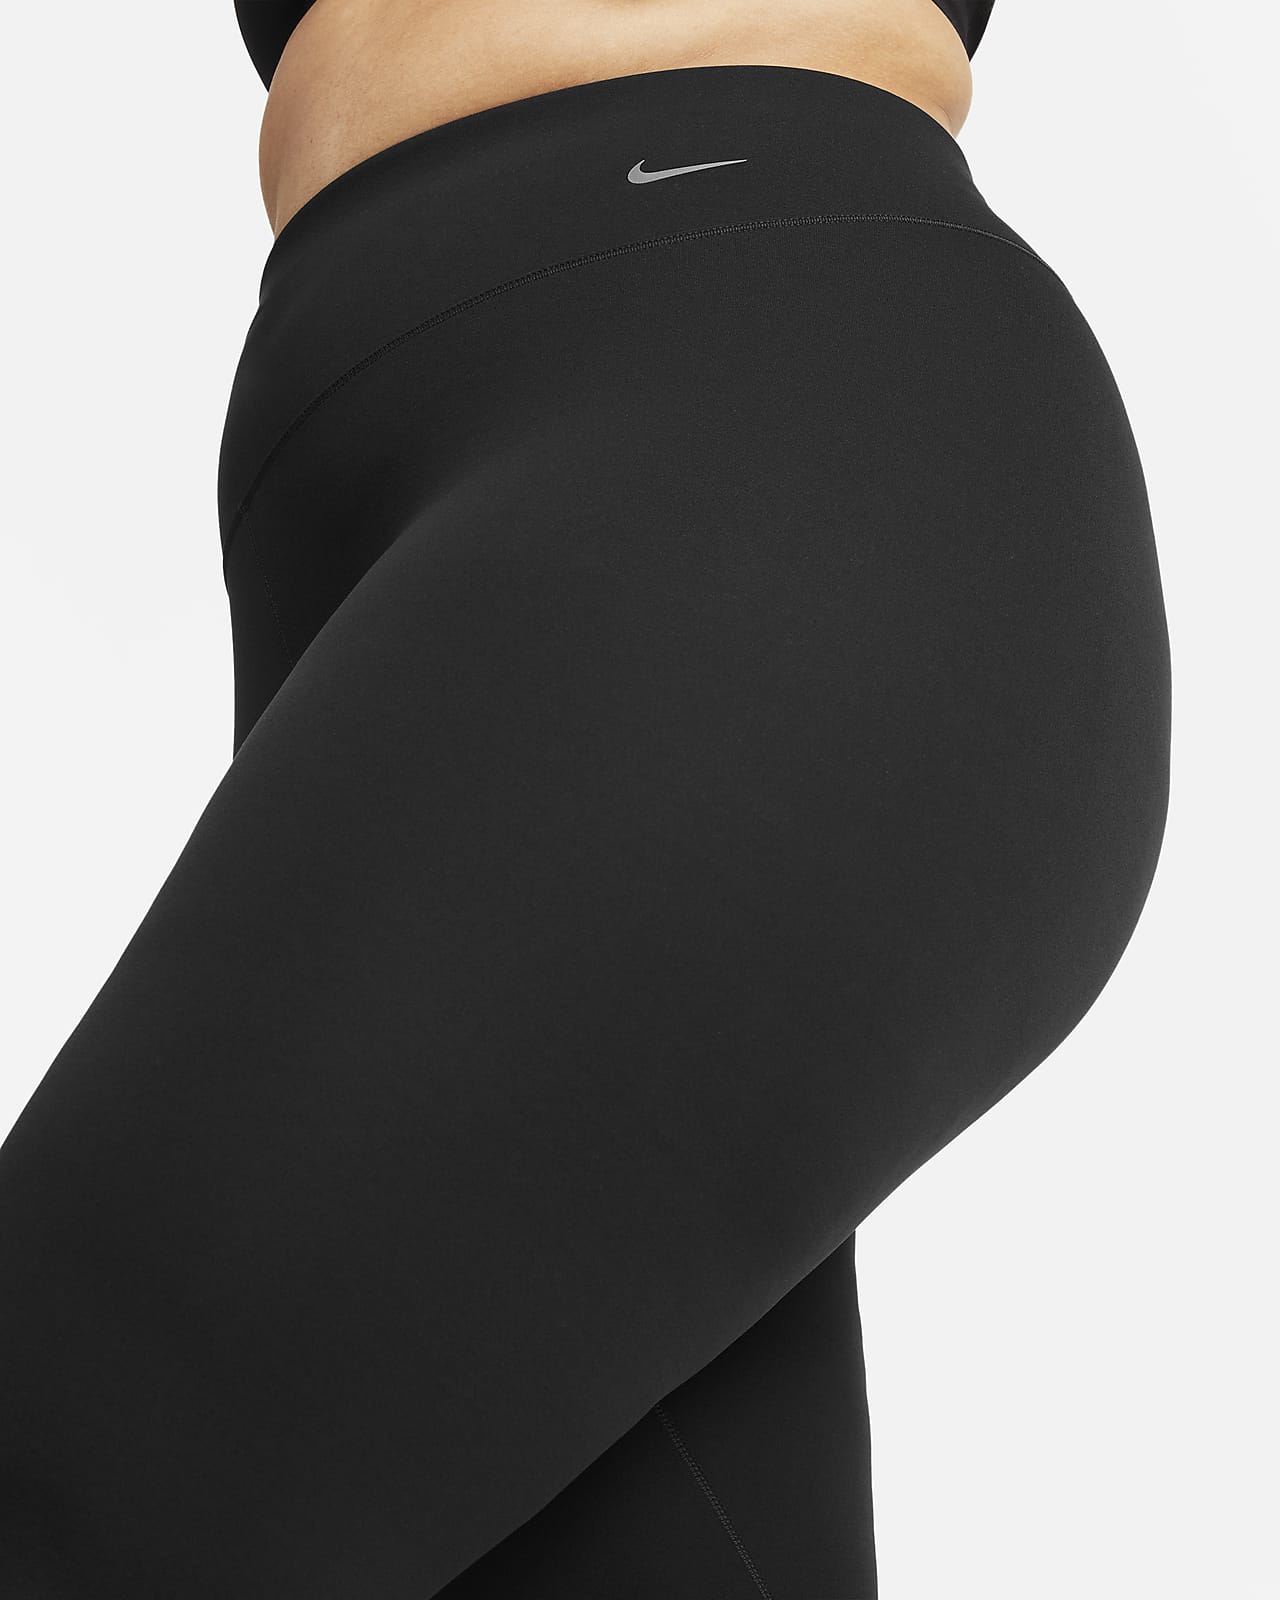 Nike Training One Dri-FIT high rise sculpt leggings in grey